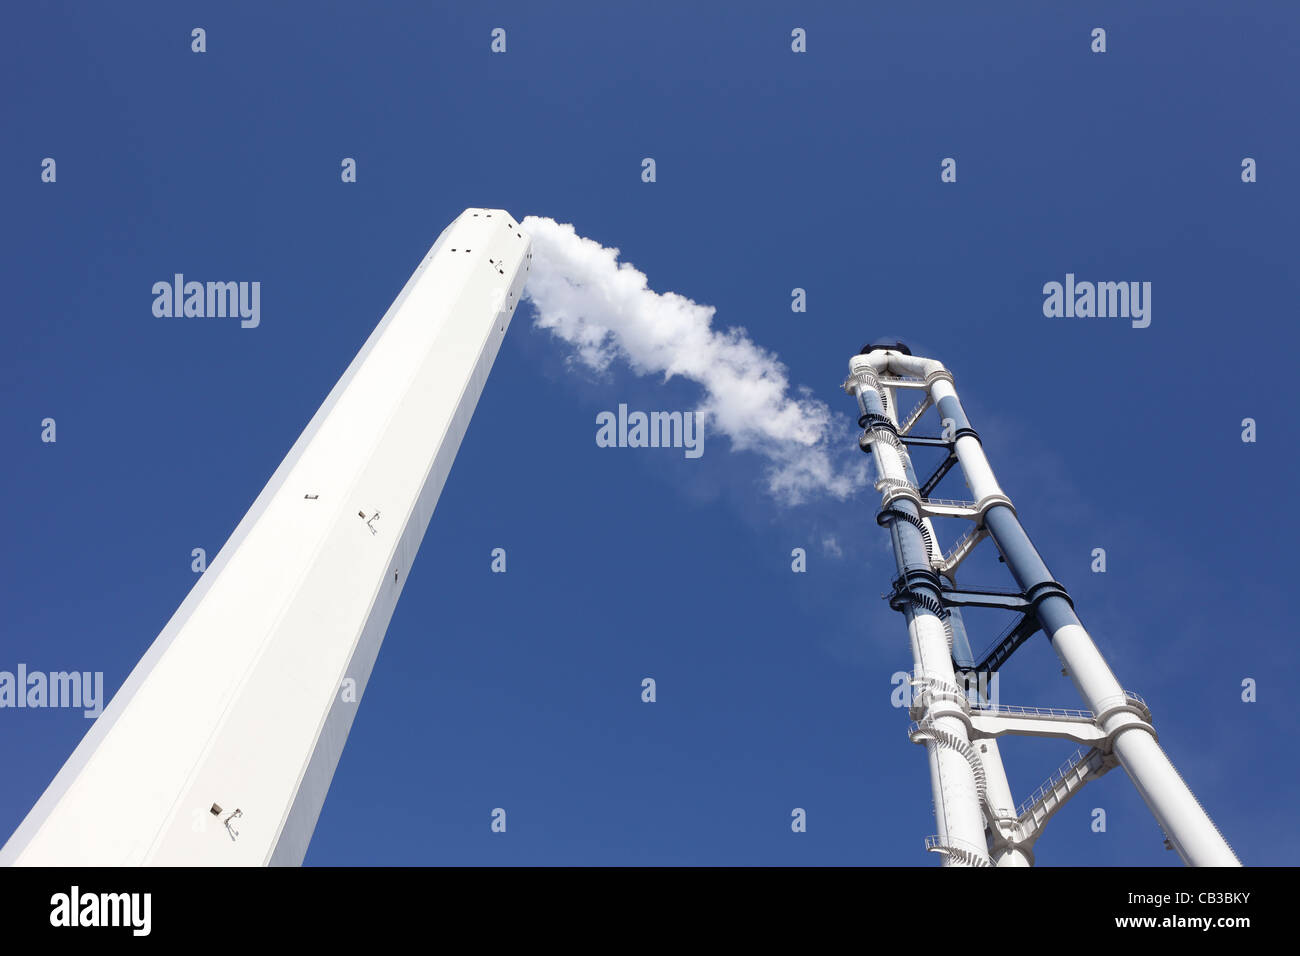 Industrial smokestack with smoke Stock Photo